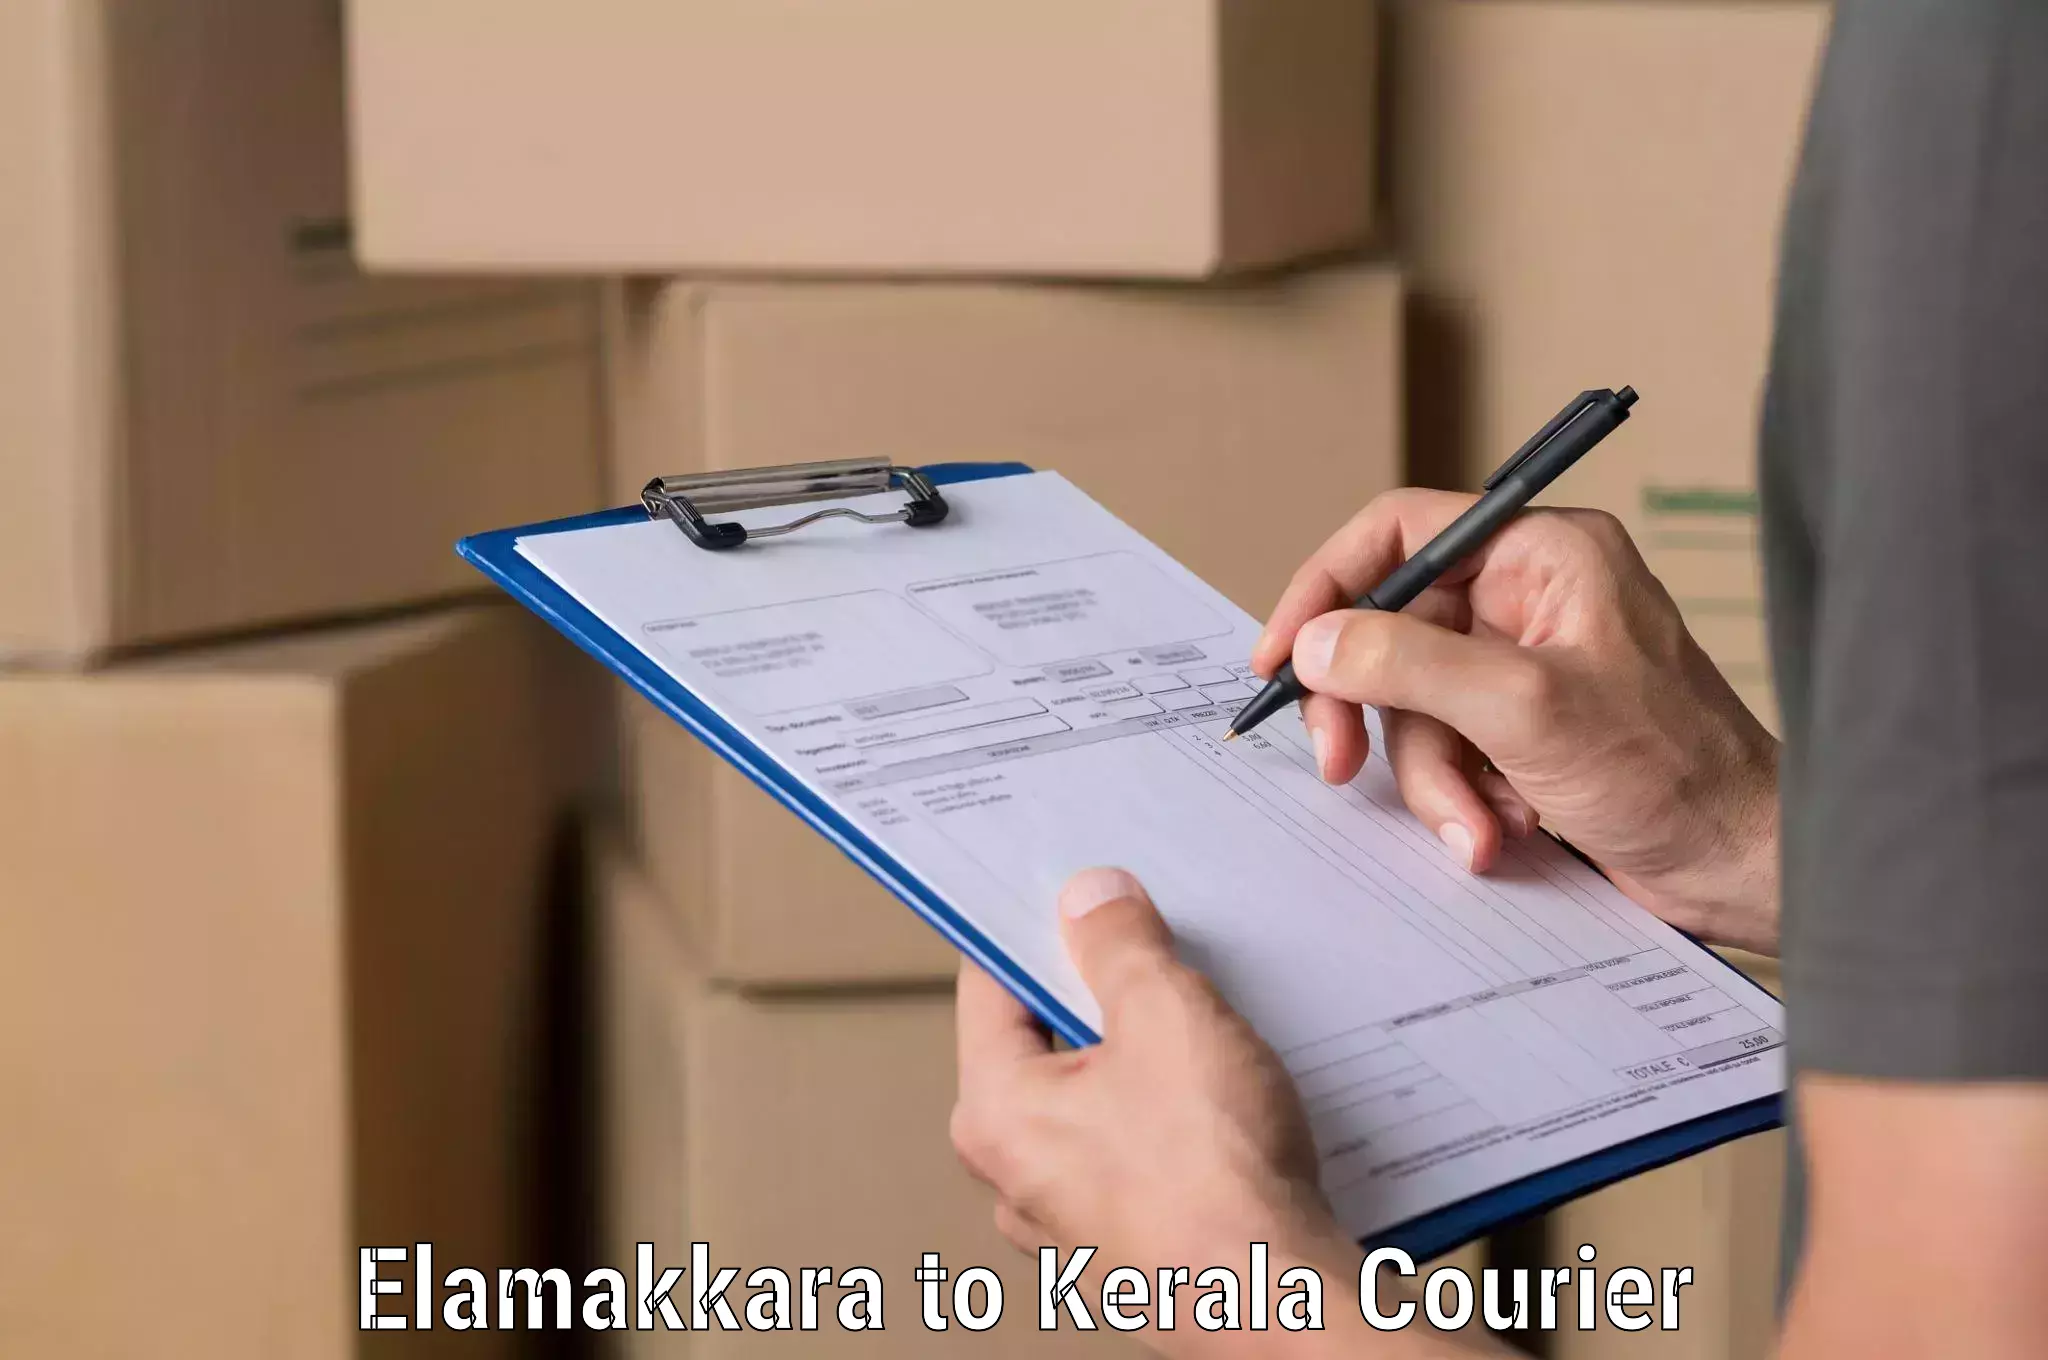 Global shipping networks Elamakkara to Kerala